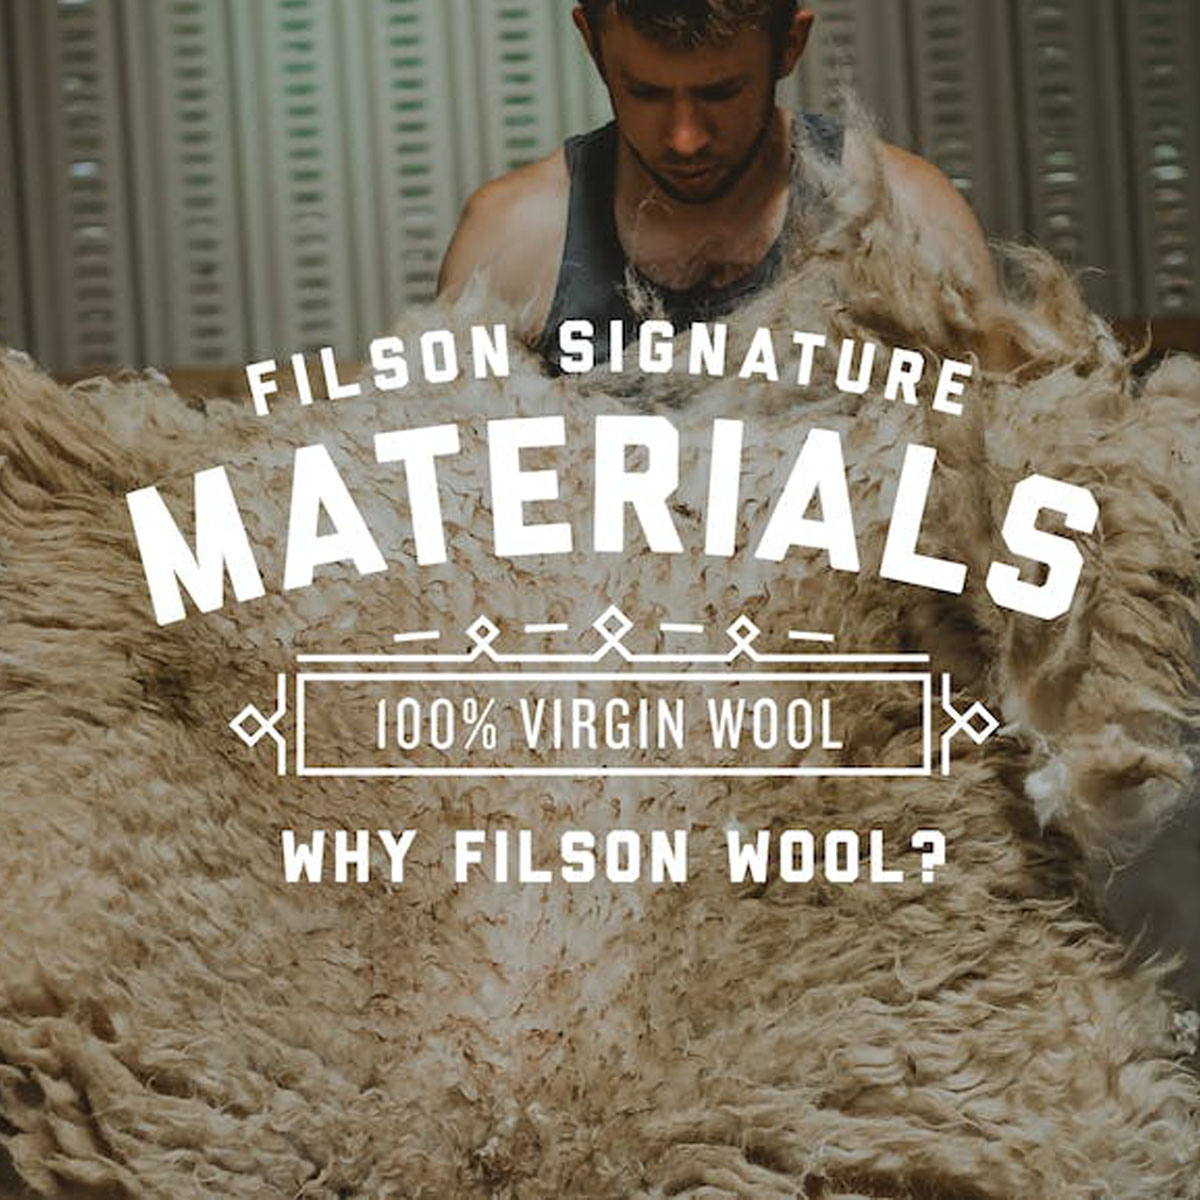 Why Filson Wool?